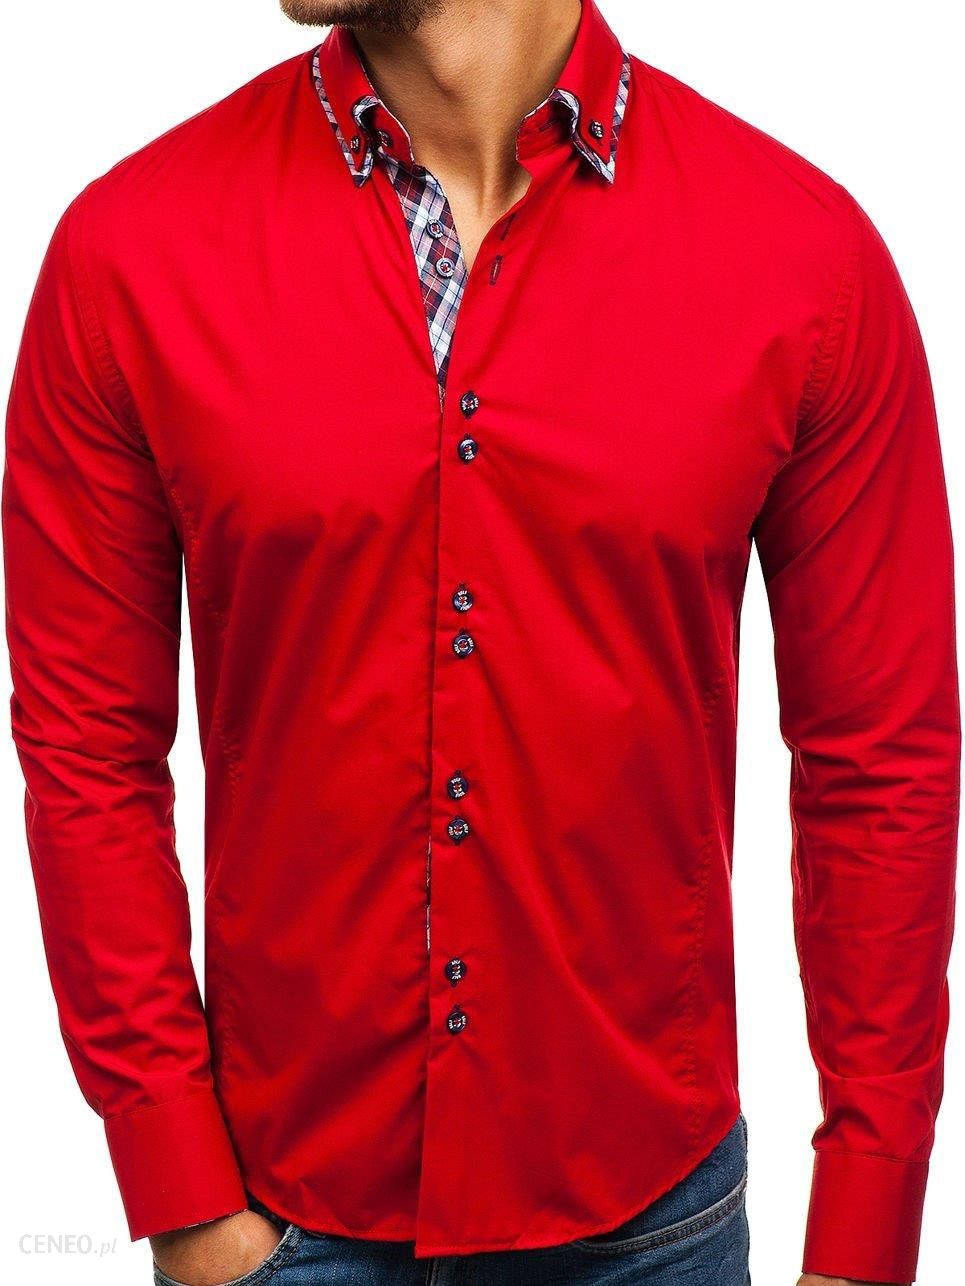 Красная мужская. Рубашка мужская MCR красная. Мужская рубашка Bolf. Мужская рубашка красного цвета. Ярко красная рубашка мужская.